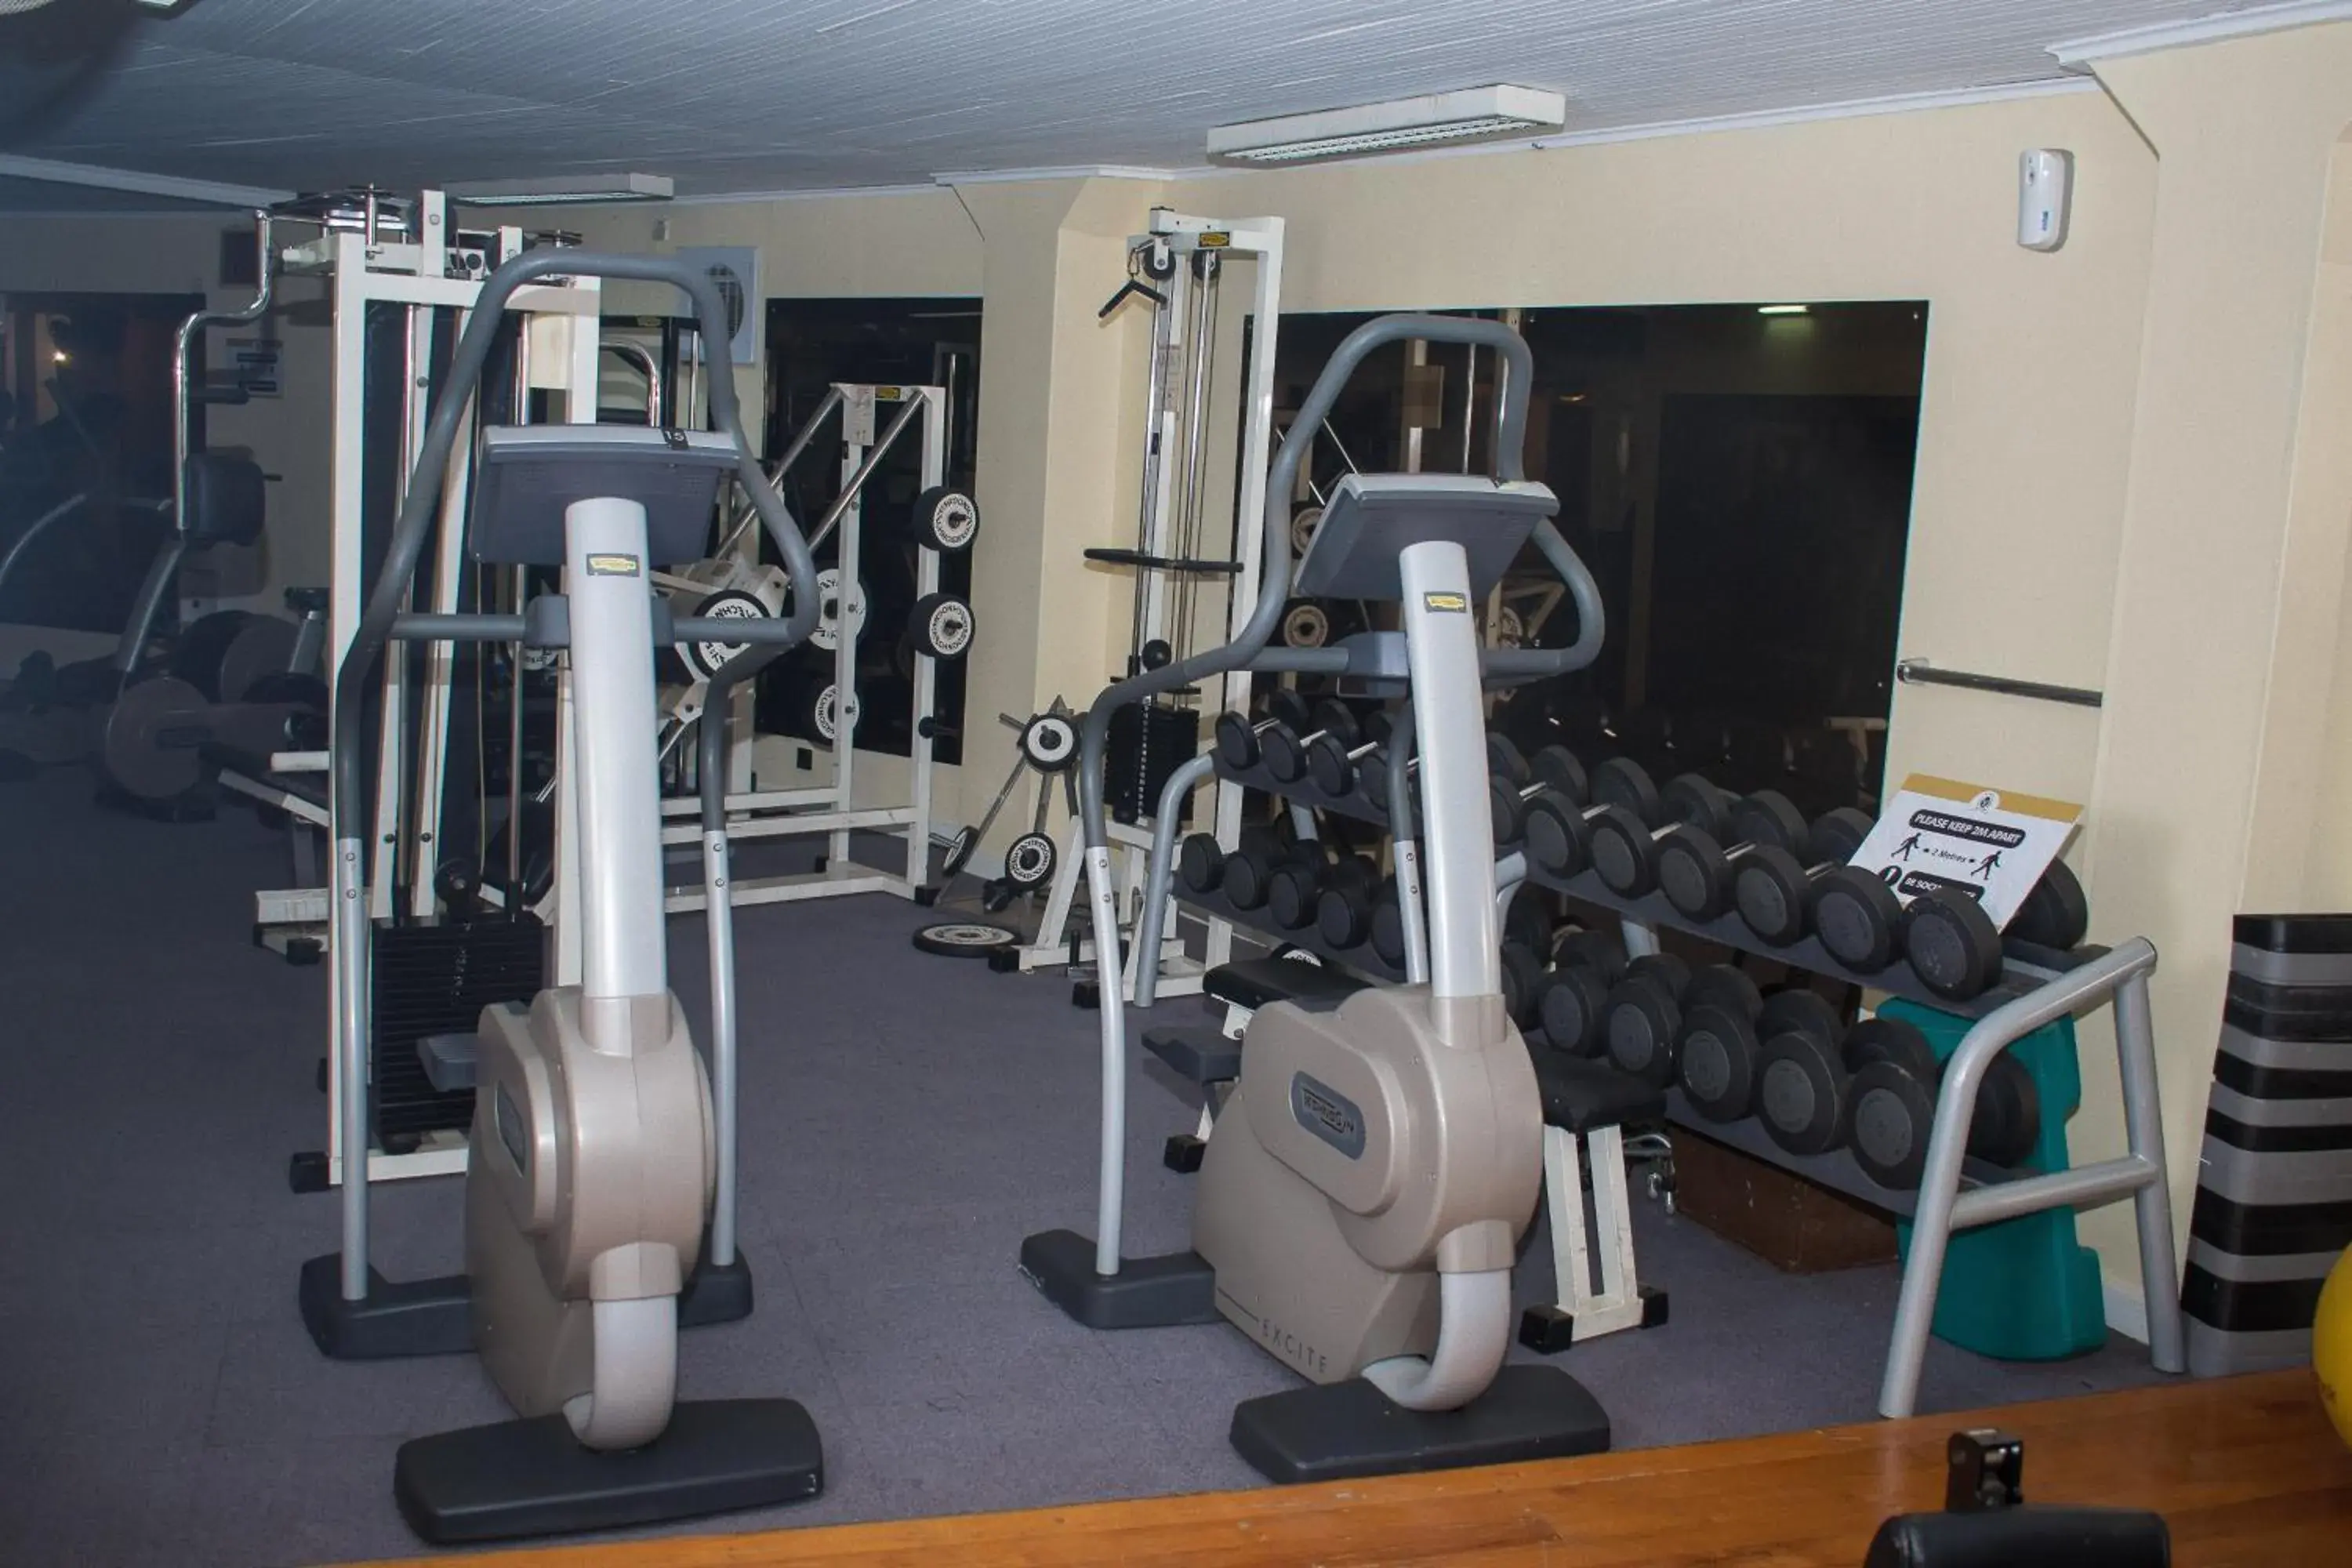 Fitness centre/facilities, Fitness Center/Facilities in Nairobi Safari Club